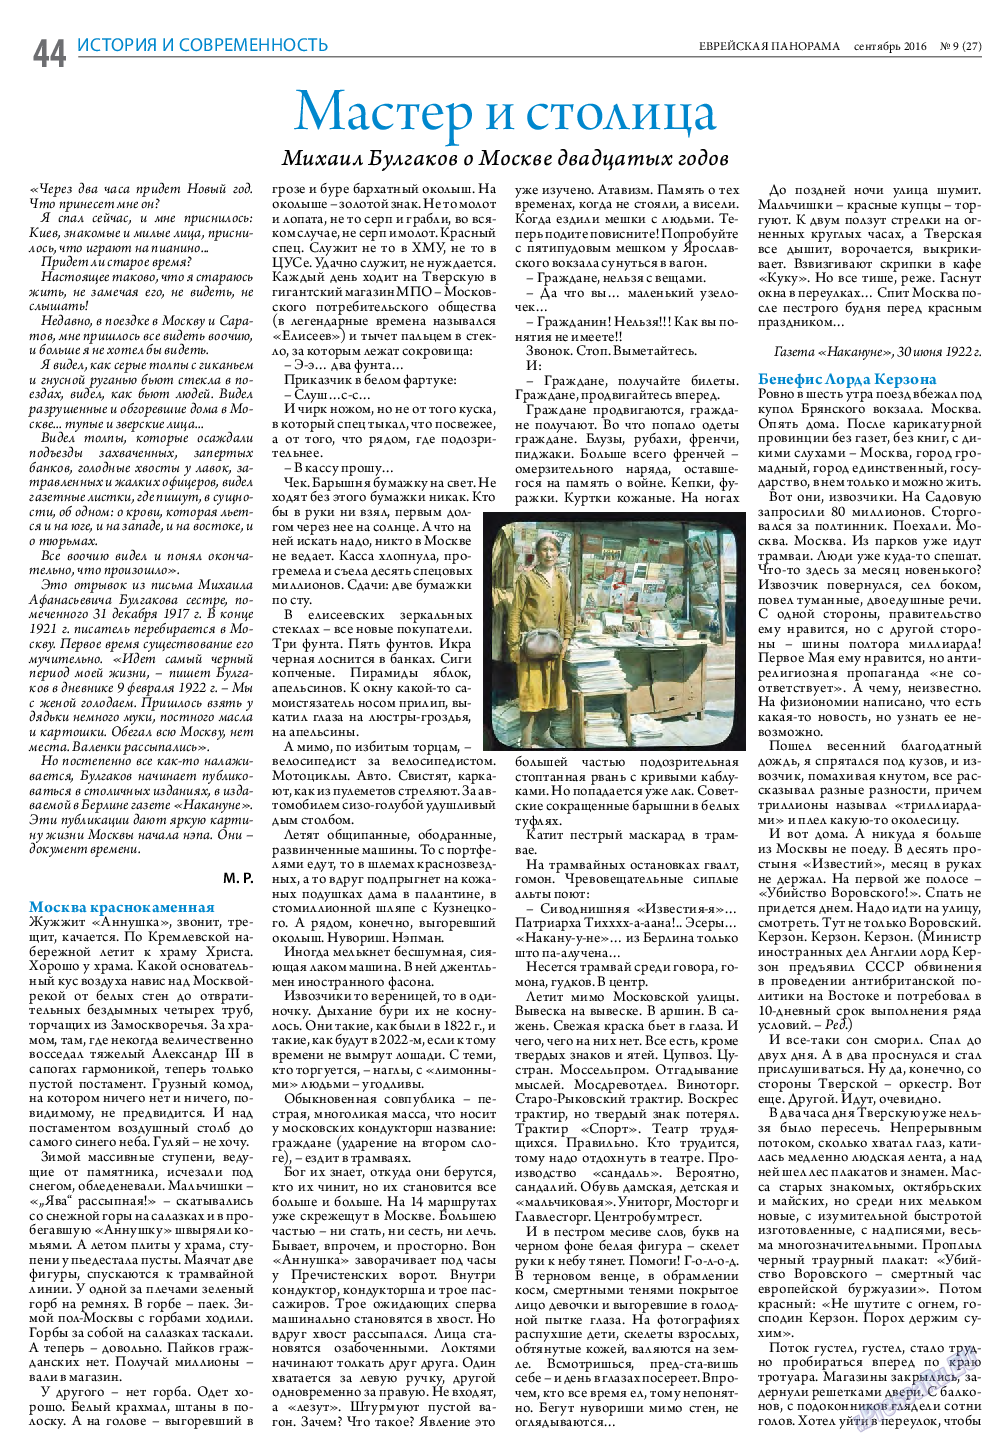 Еврейская панорама, газета. 2016 №9 стр.44